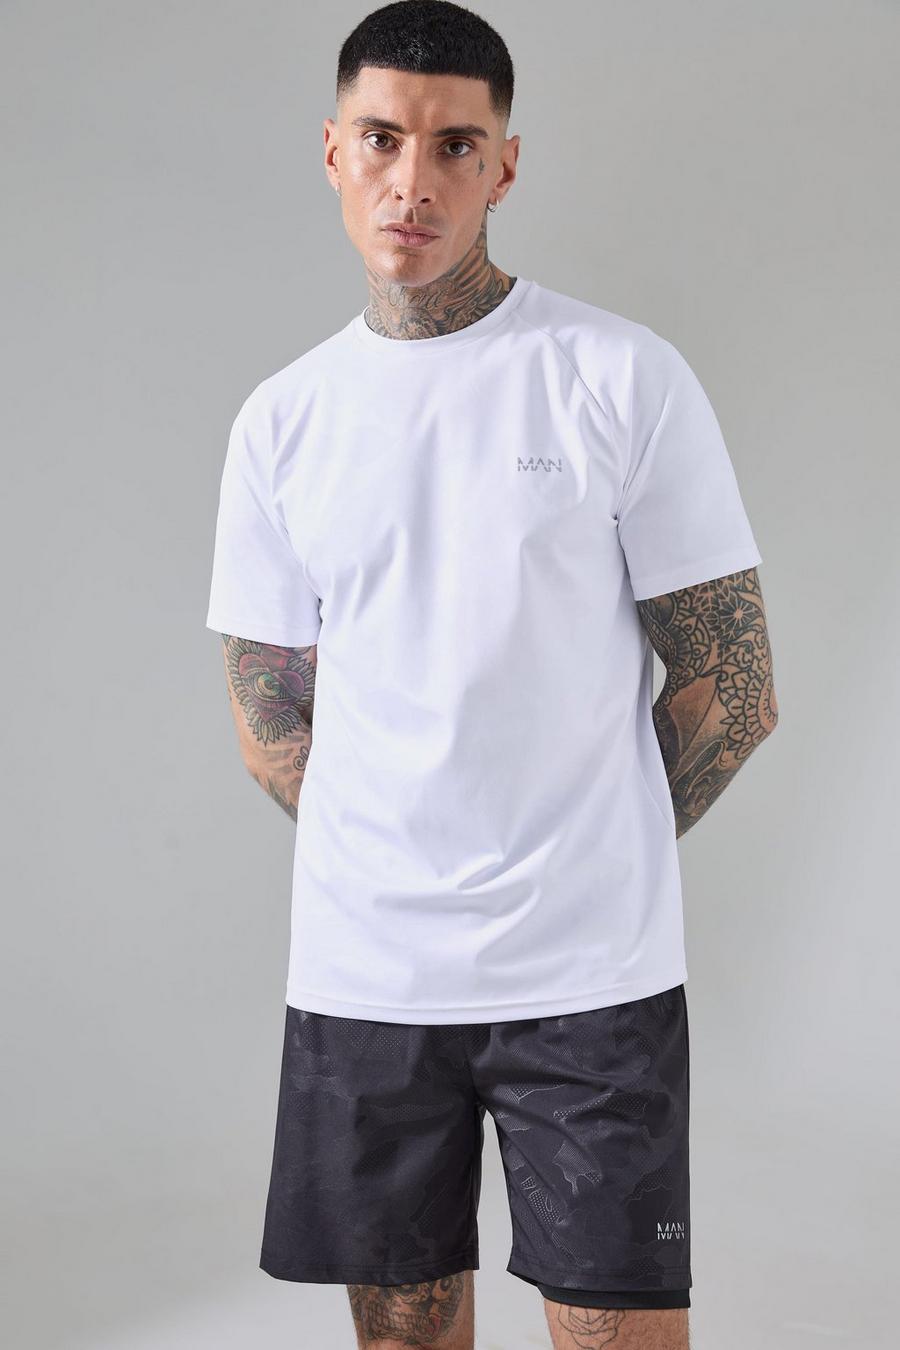 White Tall Camo Raglan Man Active Performance T-Shirt